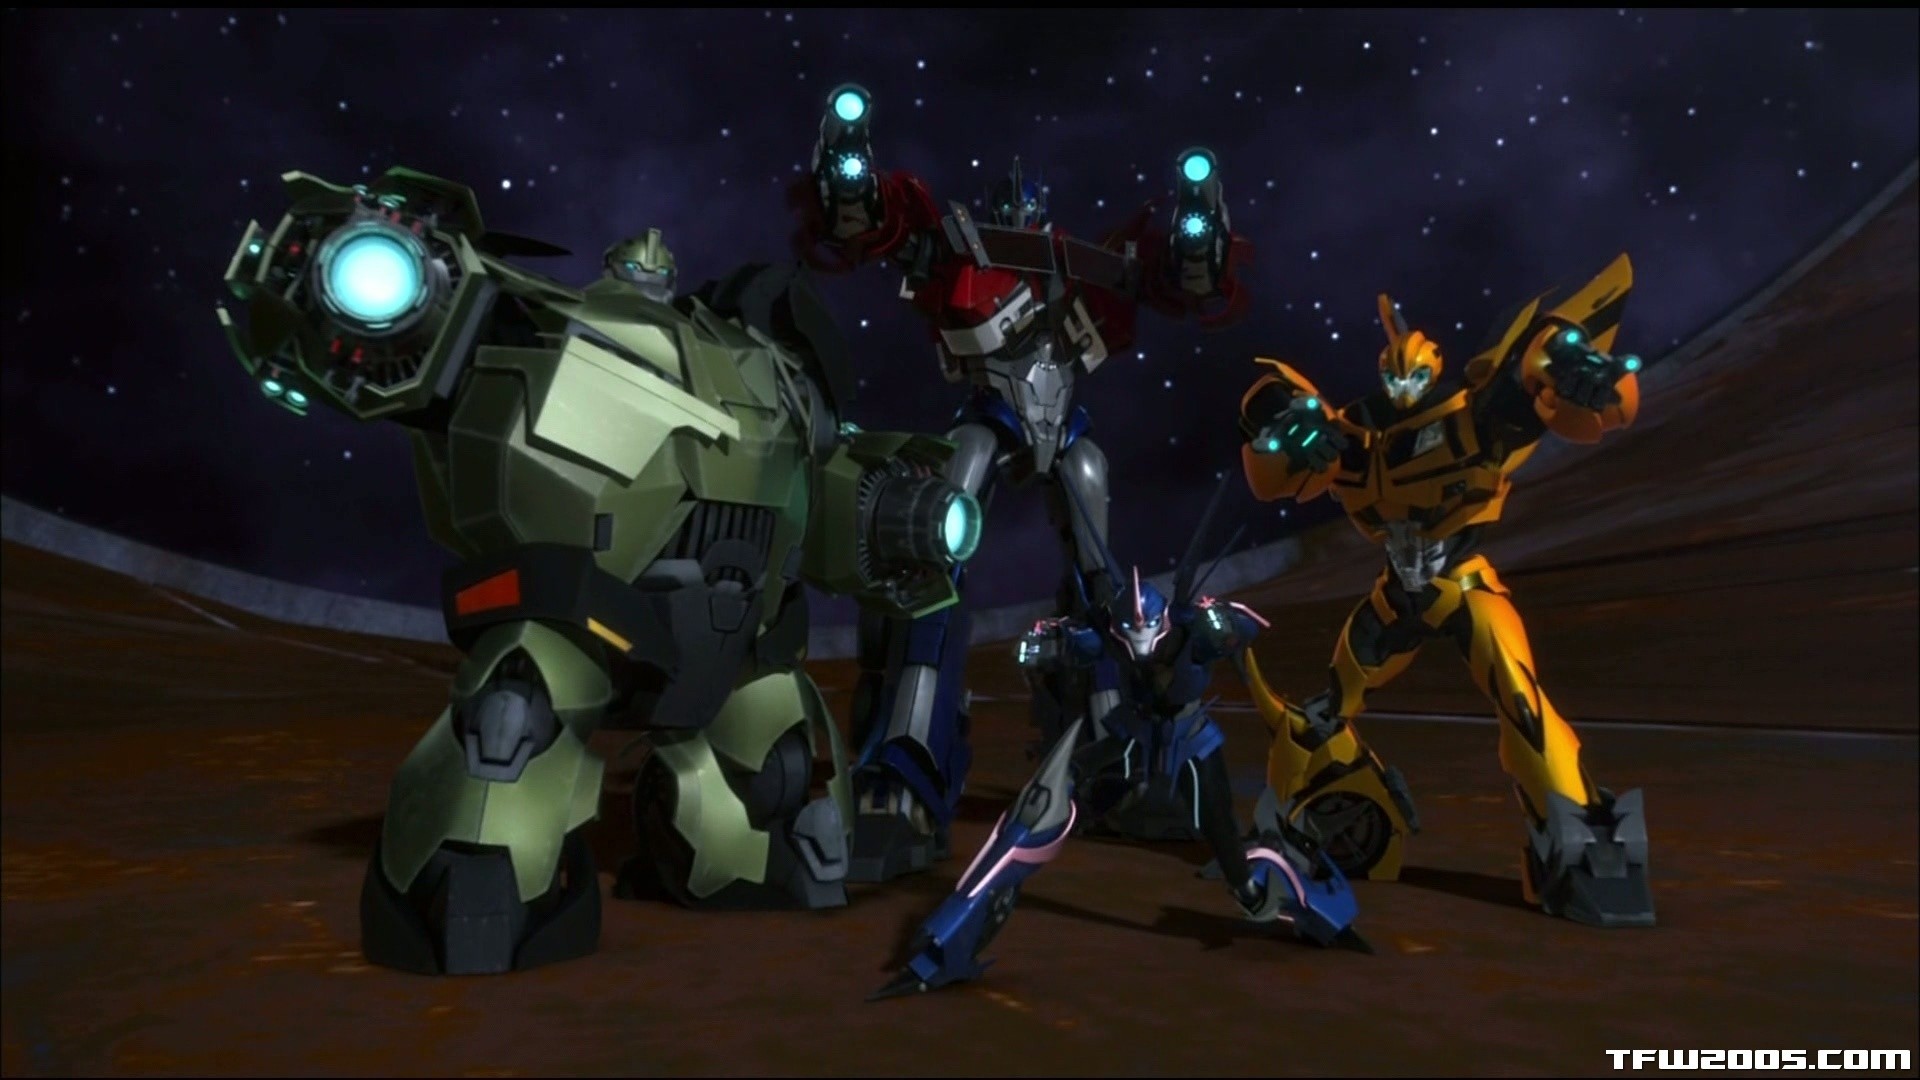 Transformers Prime Wallpaper Image